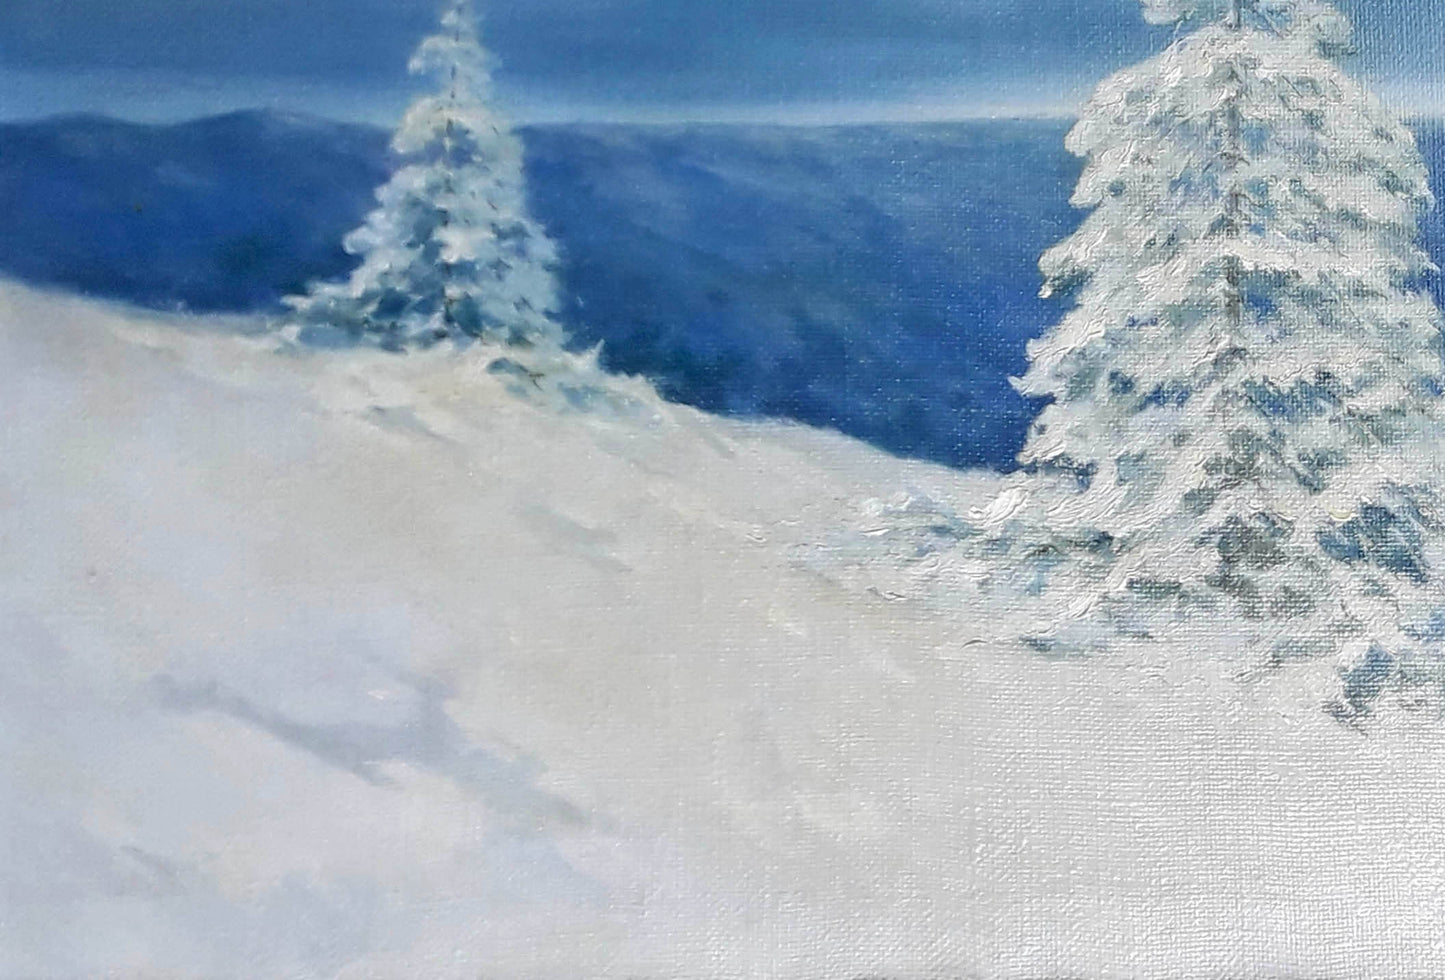 Oil painting Walk through the winter mountains Vasily Korkishko